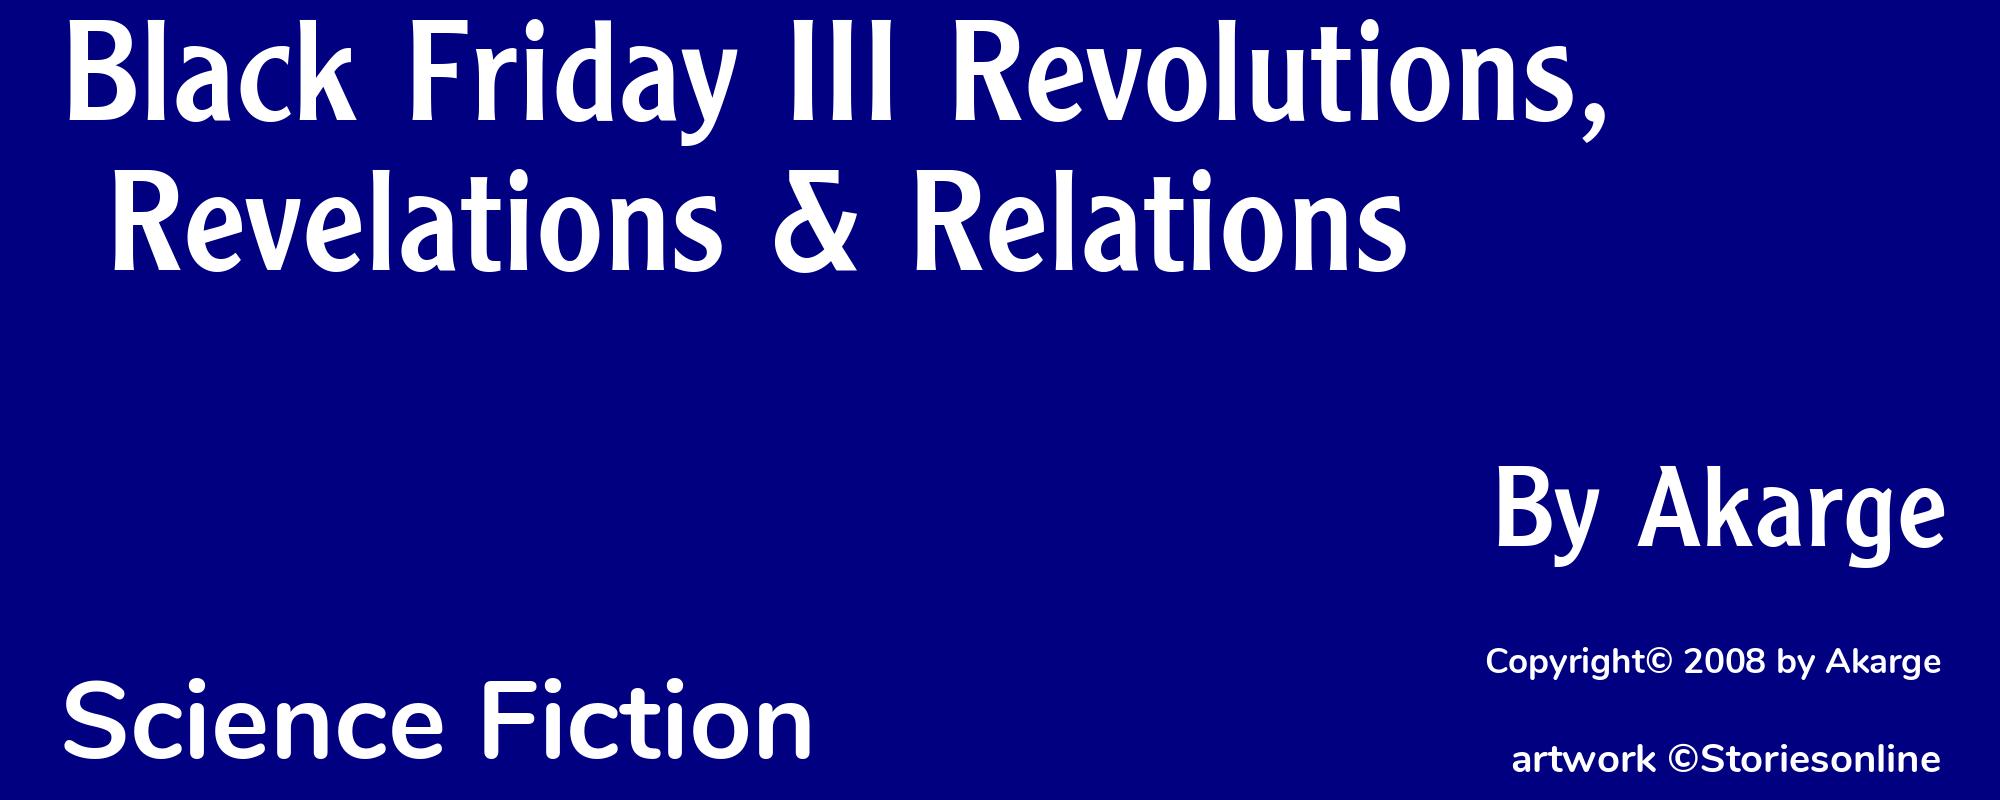 Black Friday III Revolutions, Revelations & Relations - Cover